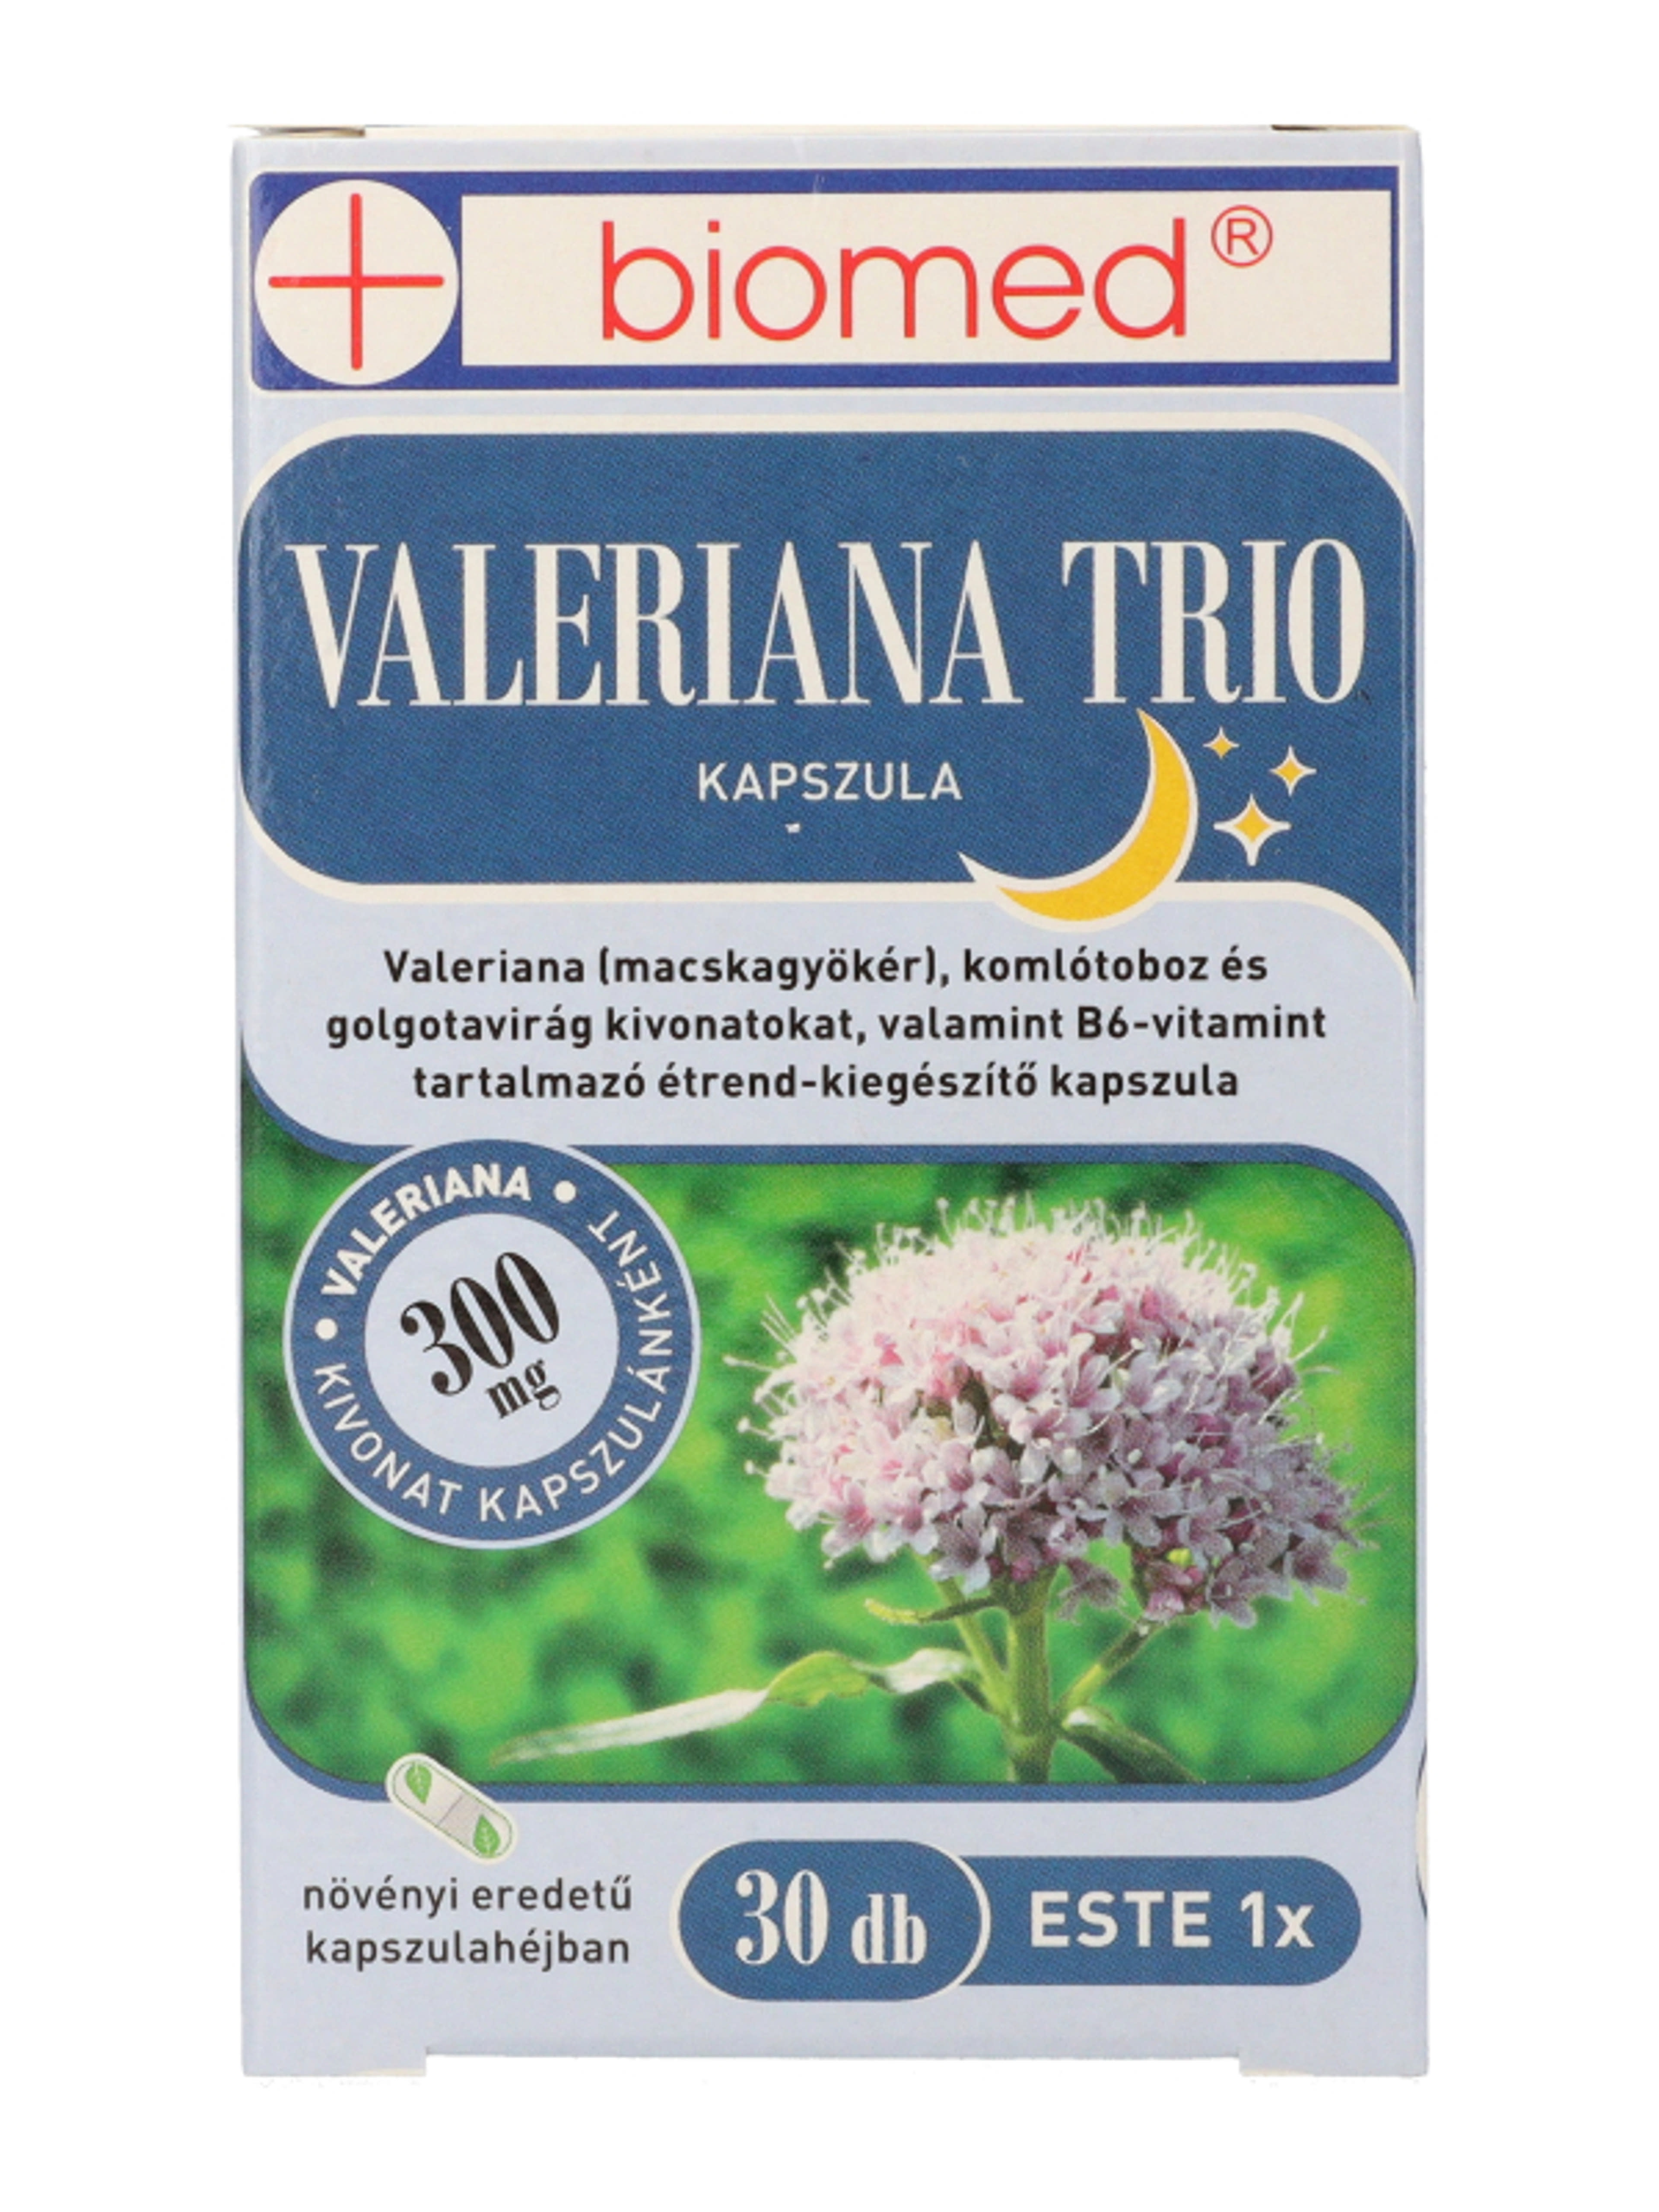 Biomed valeriana trio kapszula - 30 db-3